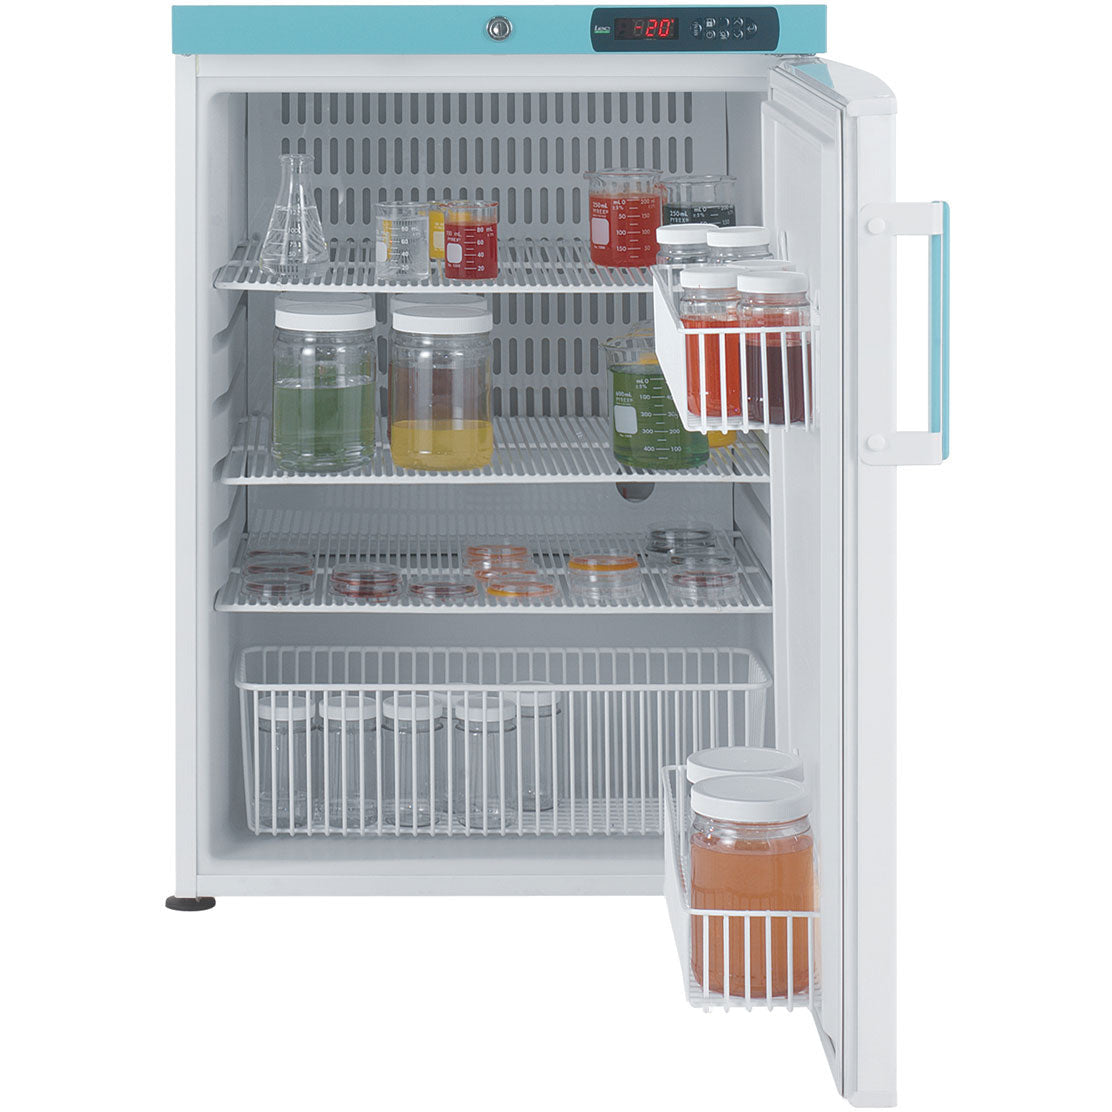 Lec LSR151UK - 151 Litre Laboratory Refrigerator - Solid Door 